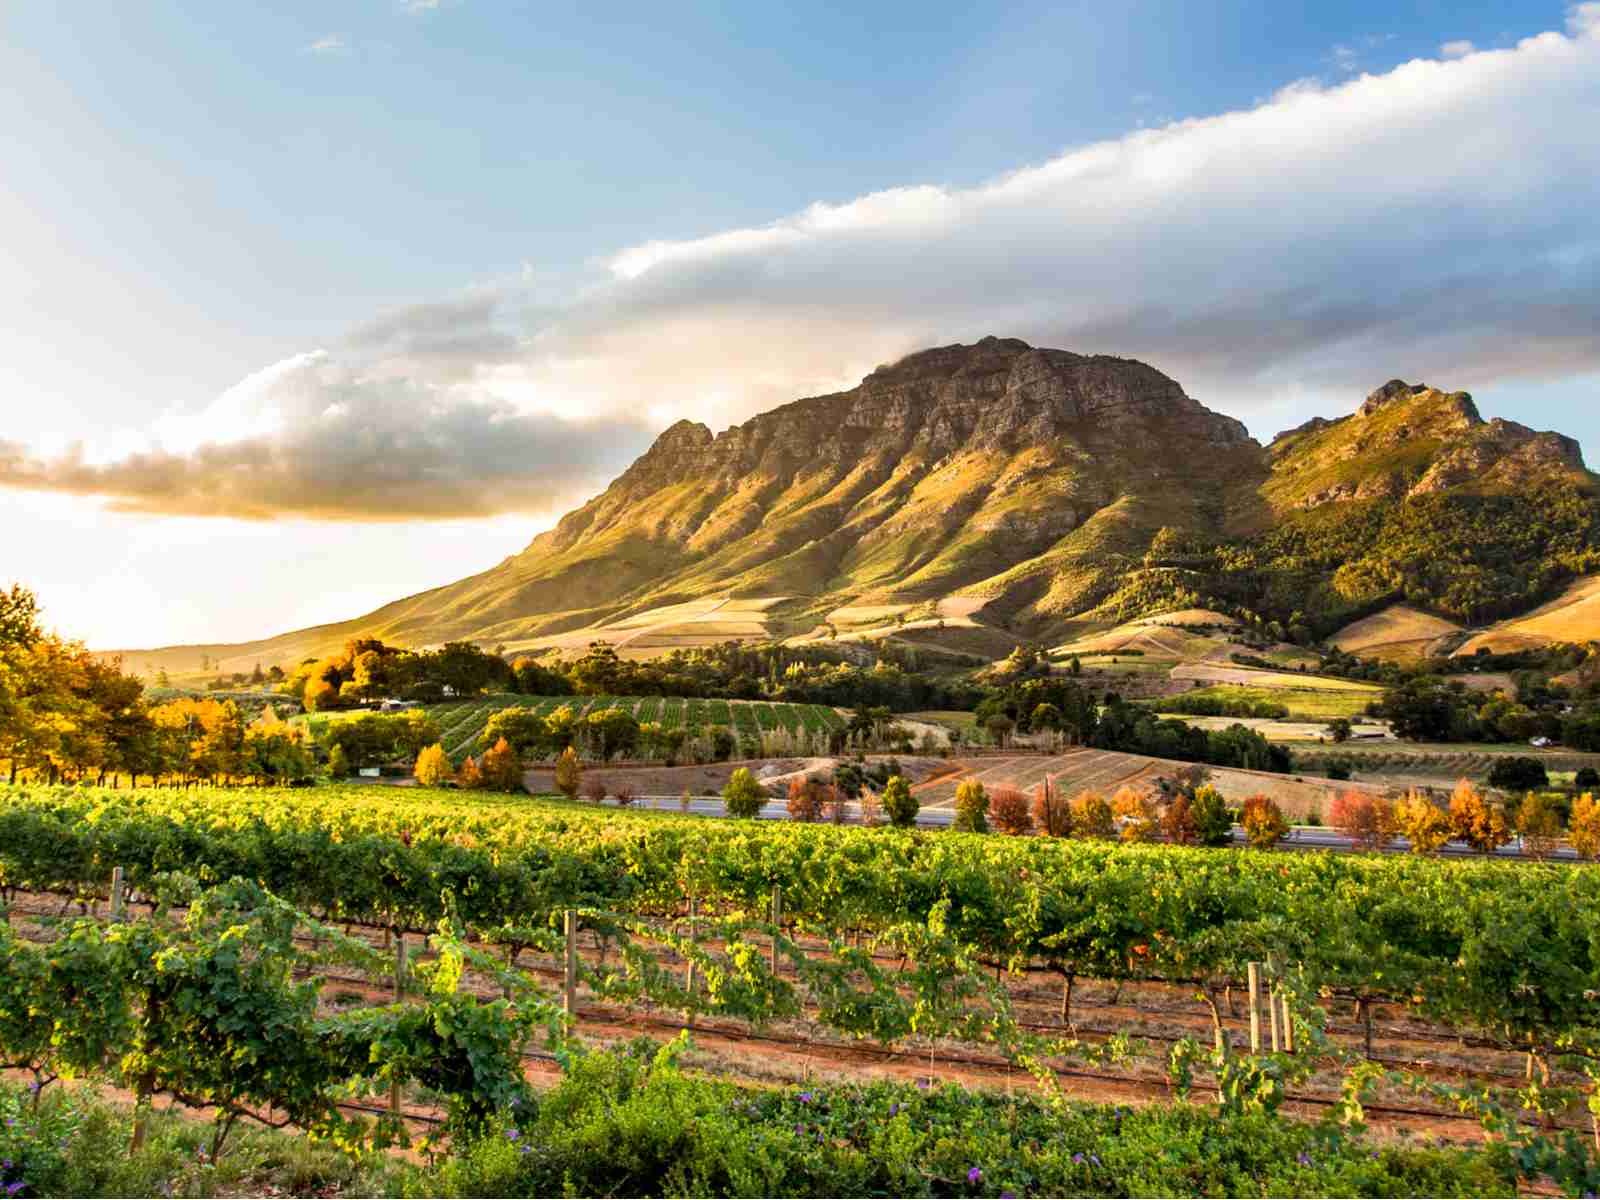 Stellenbosch vineyards with a view of the Simonsberg.